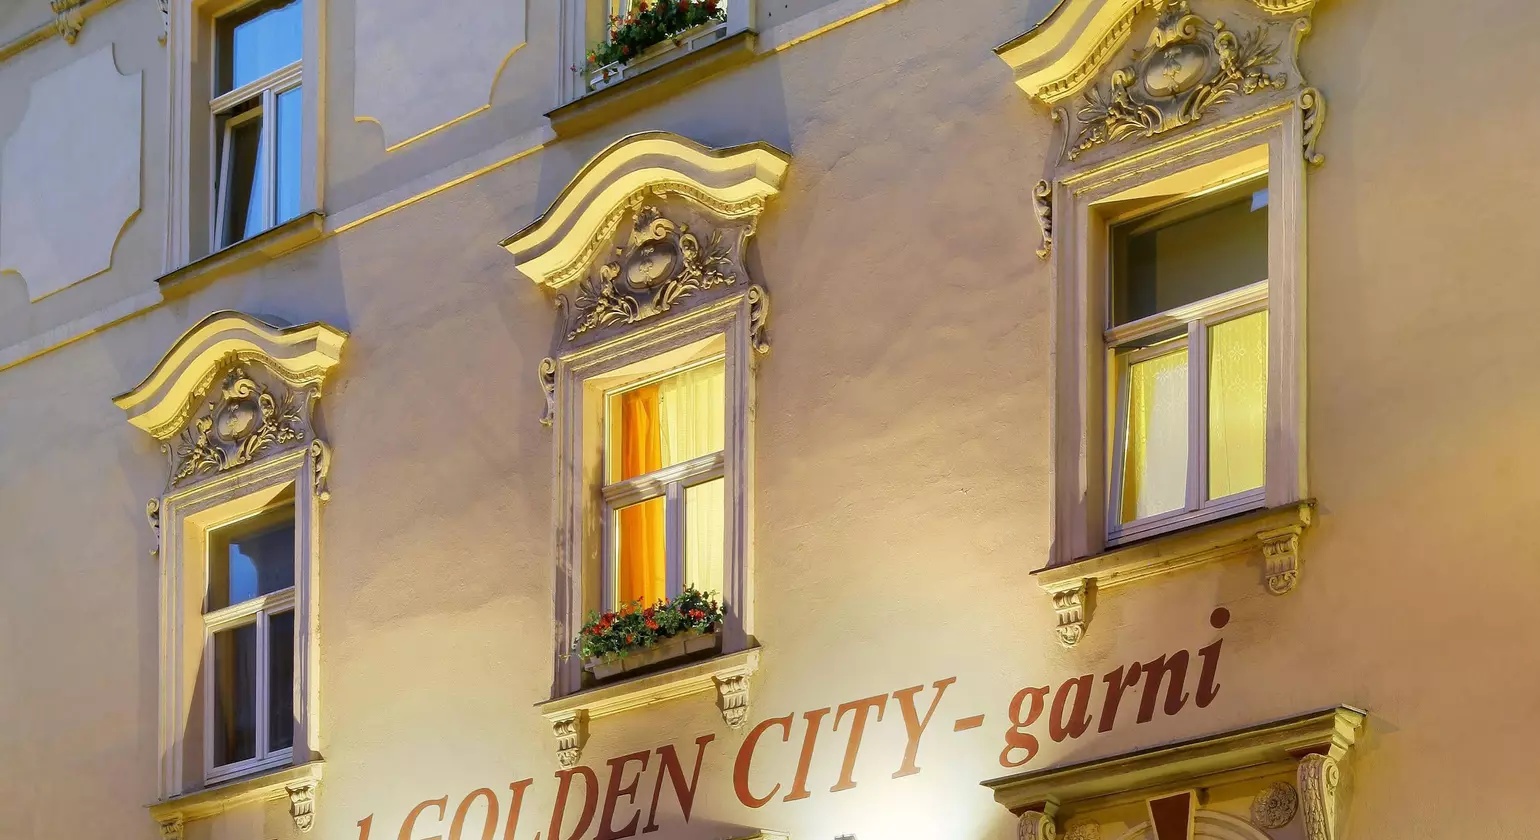 Hotel Golden City garni